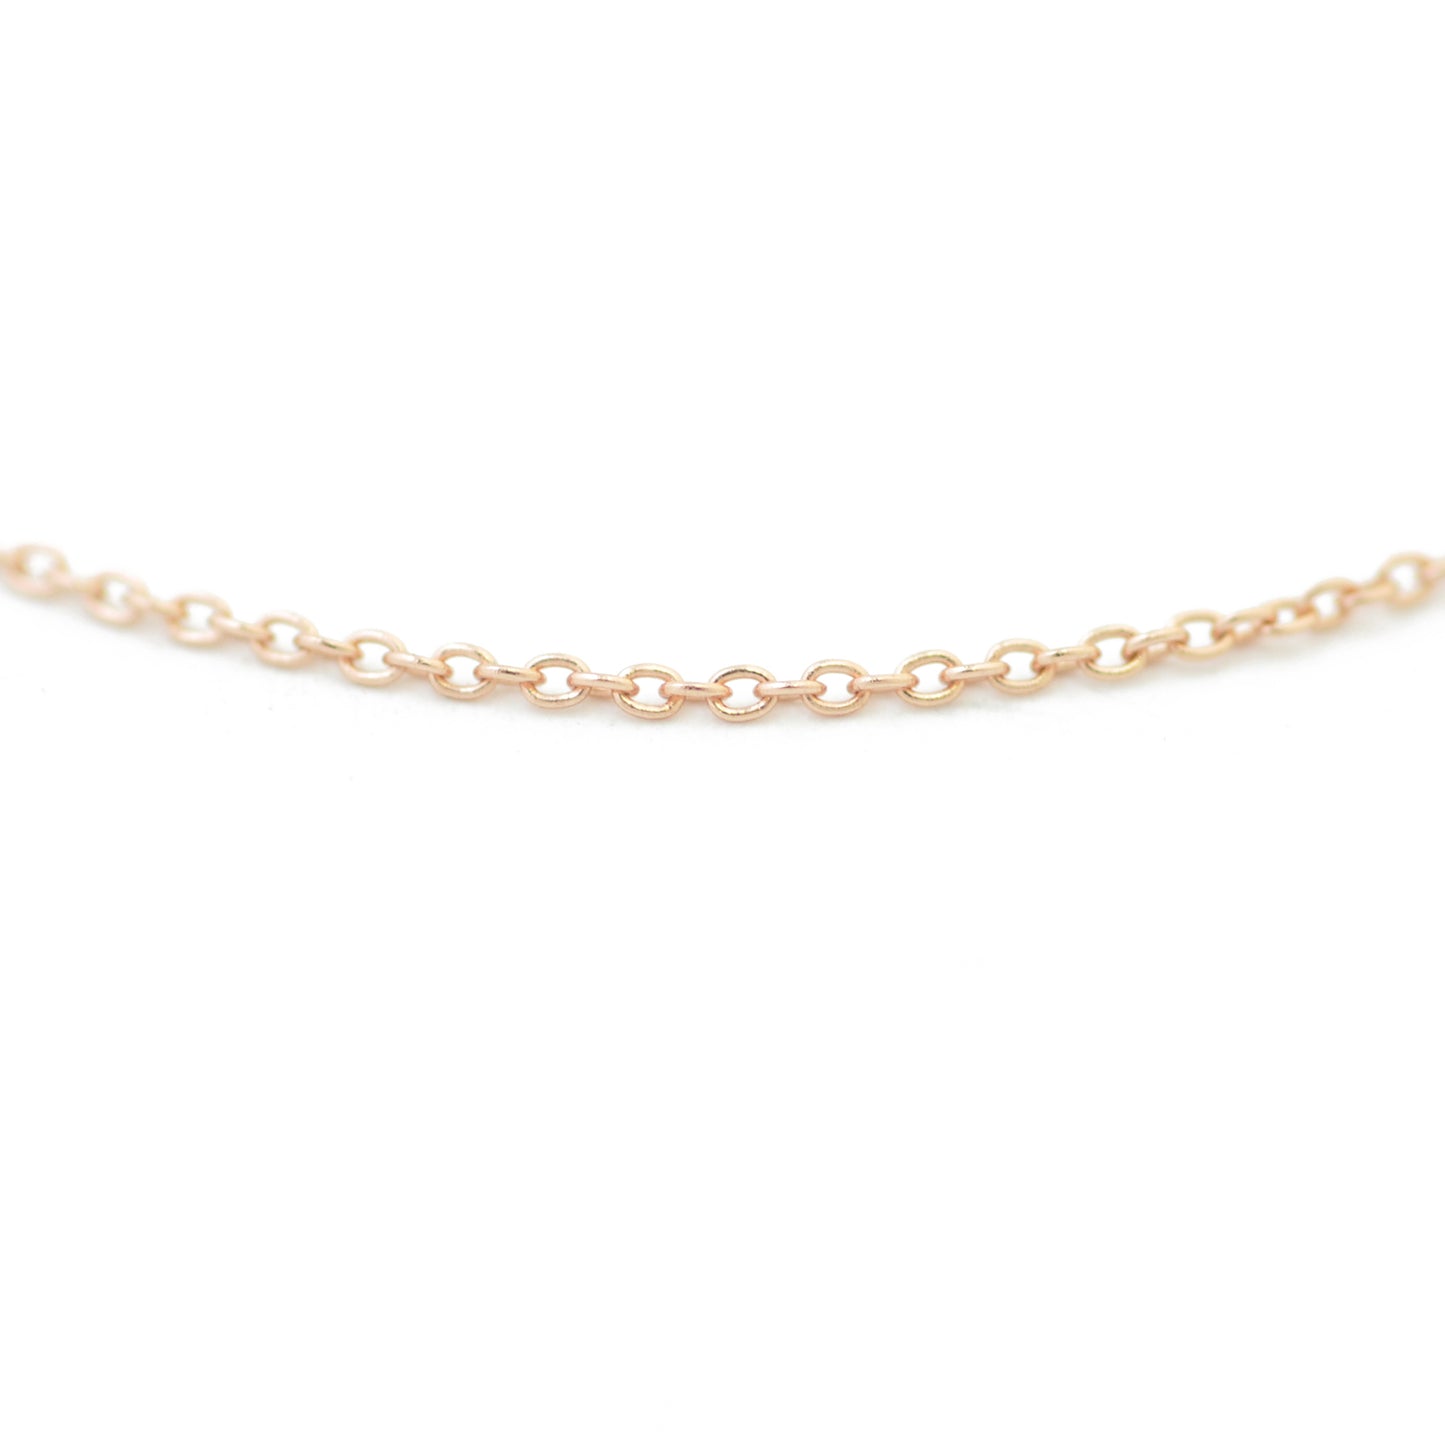 Delicate bracelet / 925 silver 18k rose gold plated / 16-17 cm